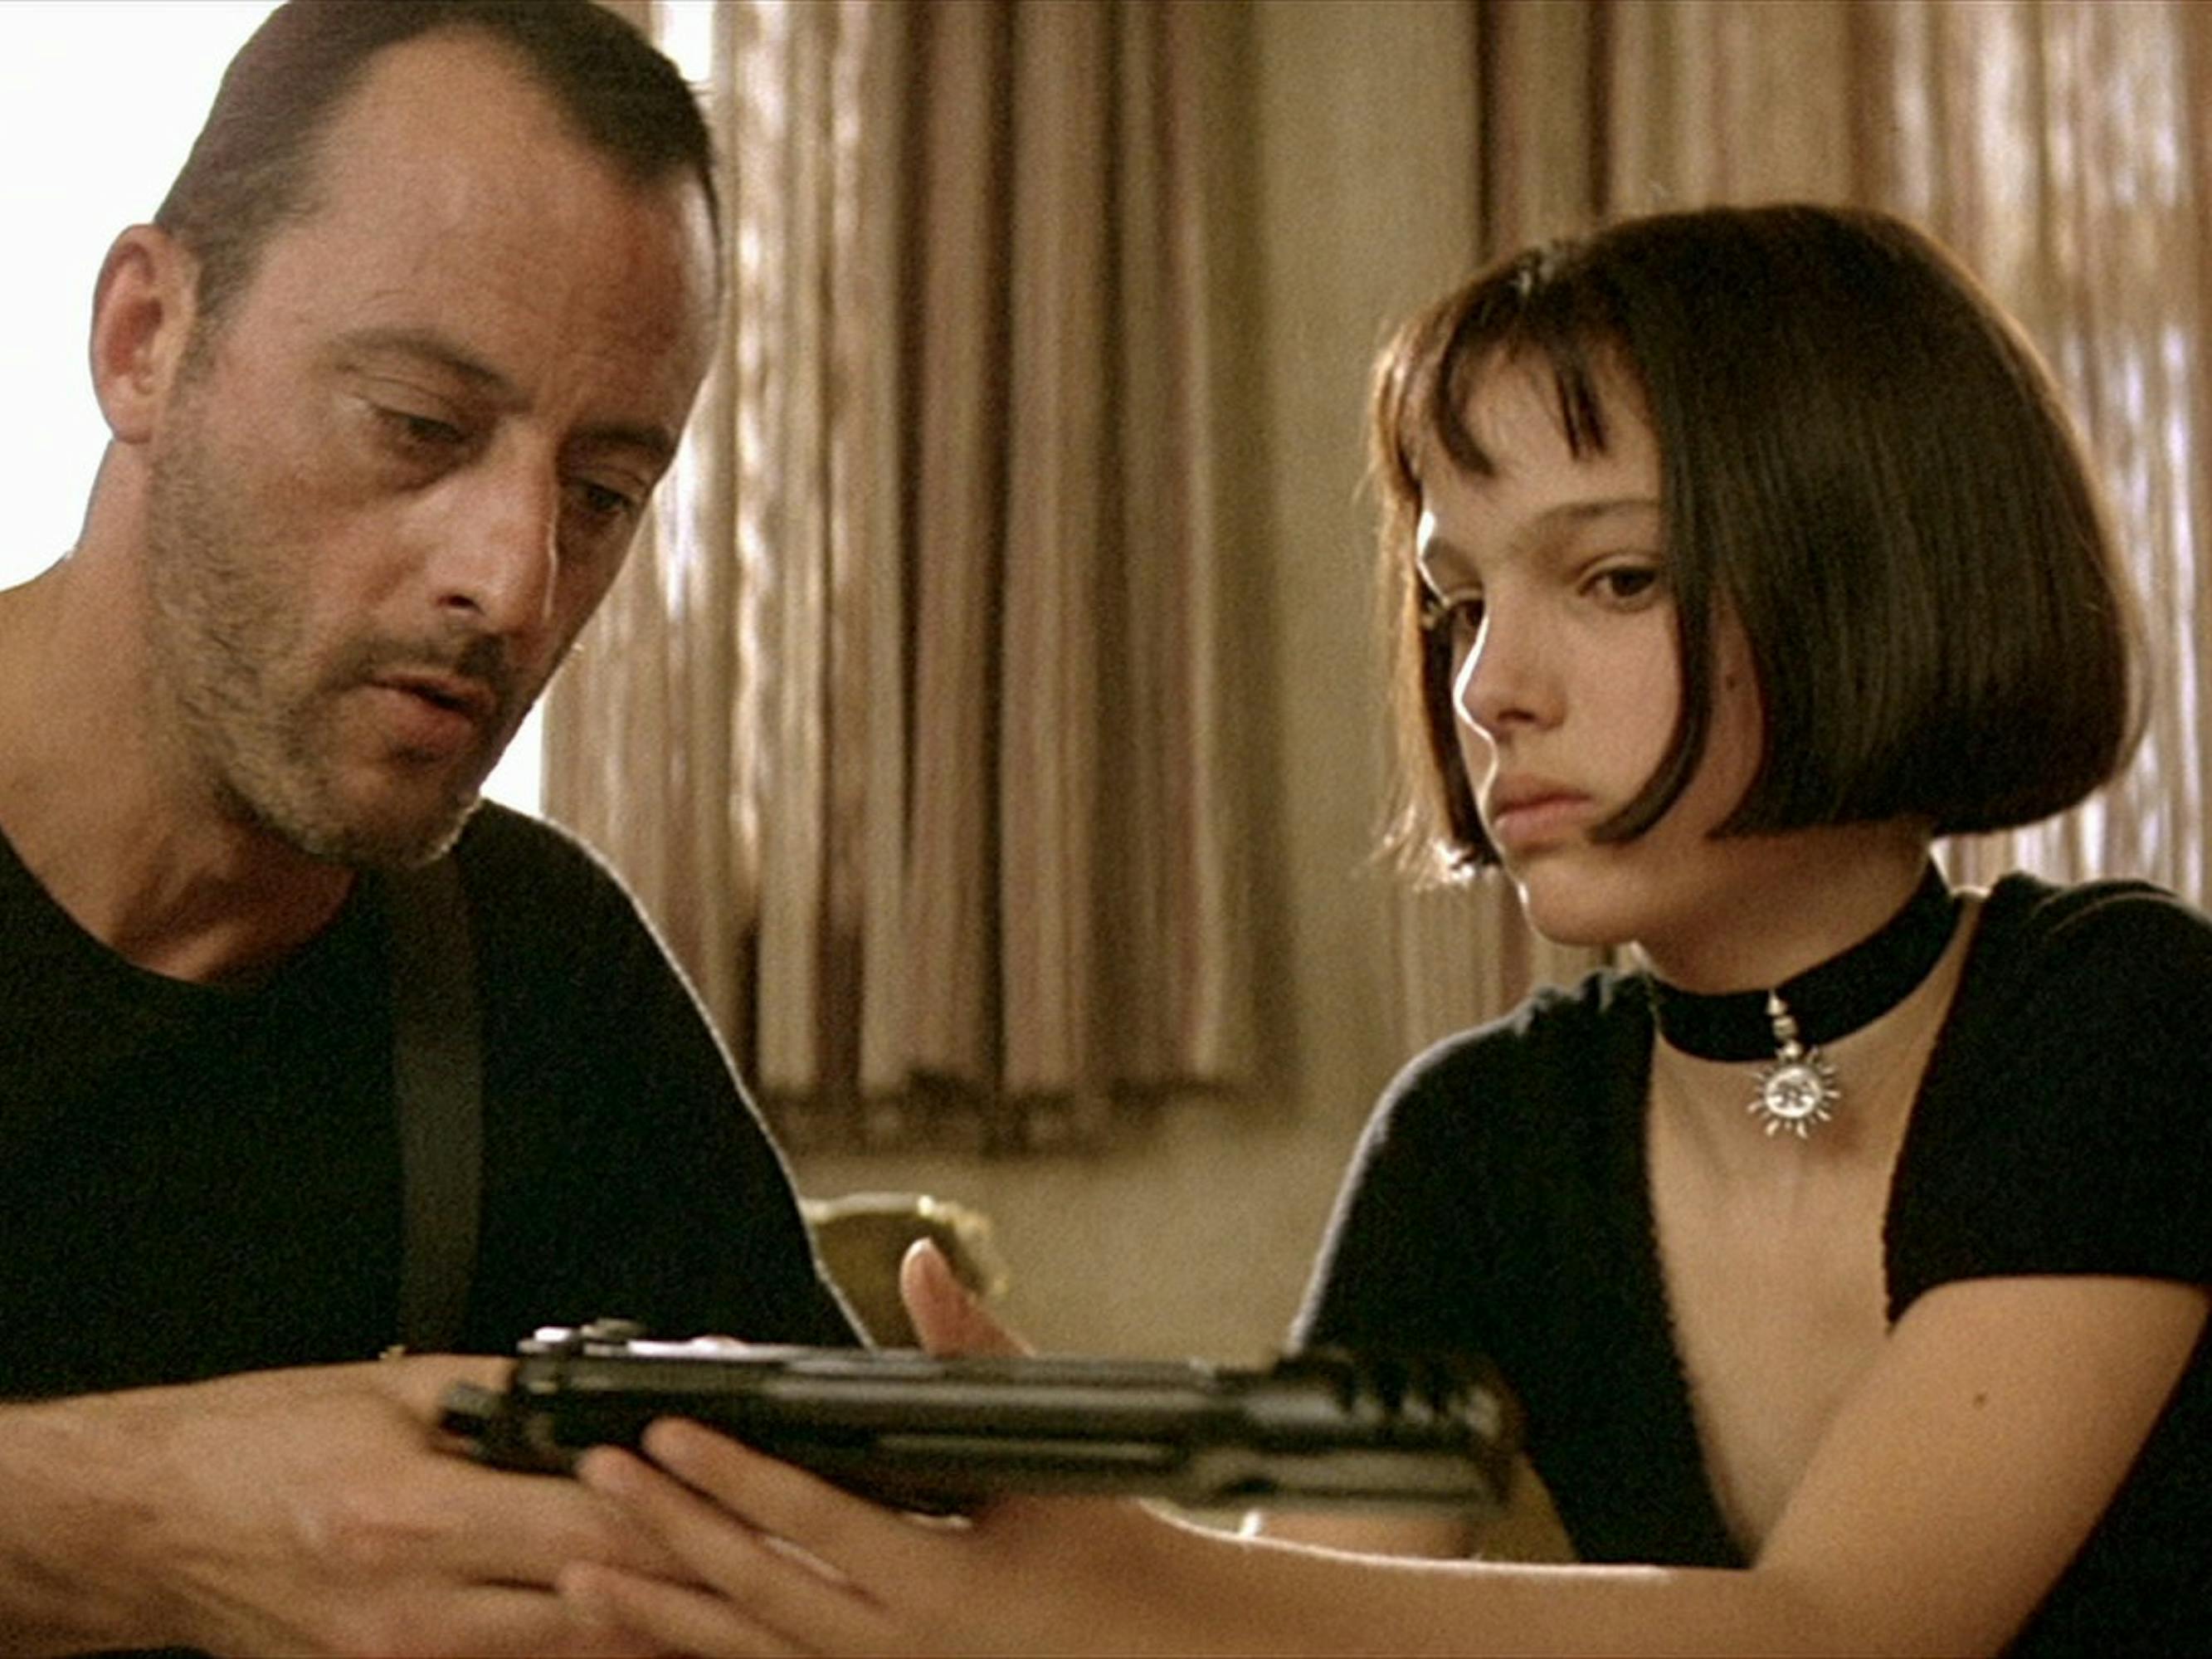 Léon (Jean Reno) and Mathilda (Natalie Portman) sit in a beige room looking at a gun.